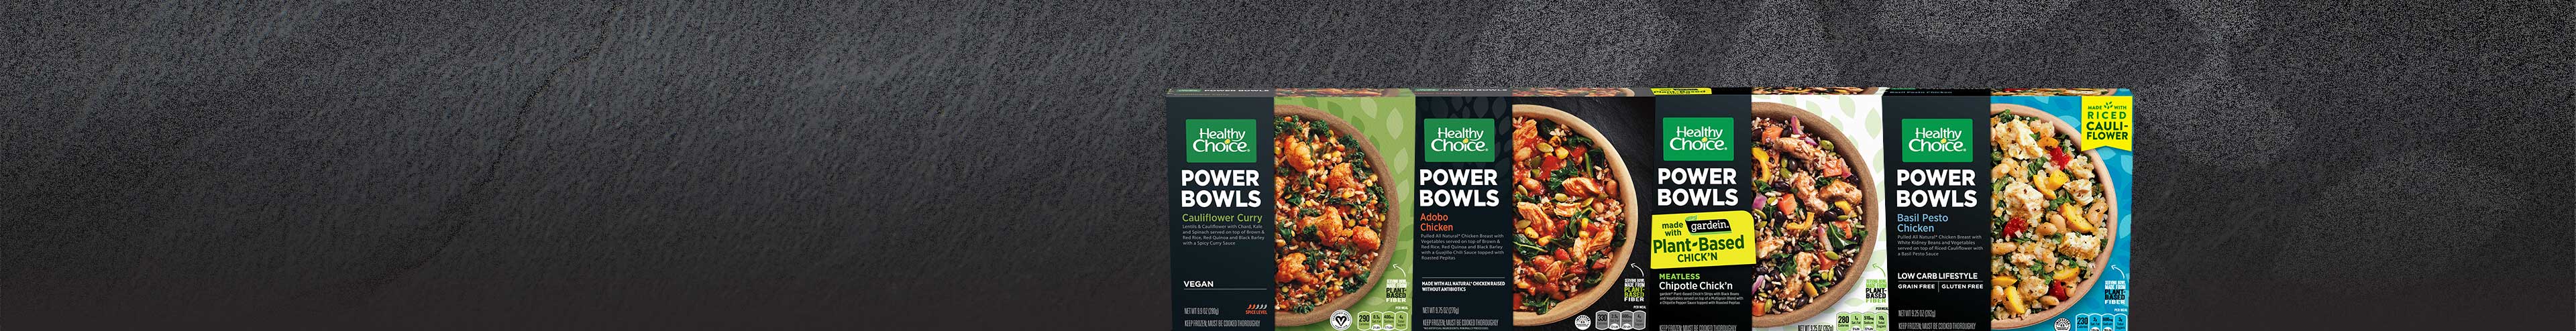 Healthy Choice Power Bowls